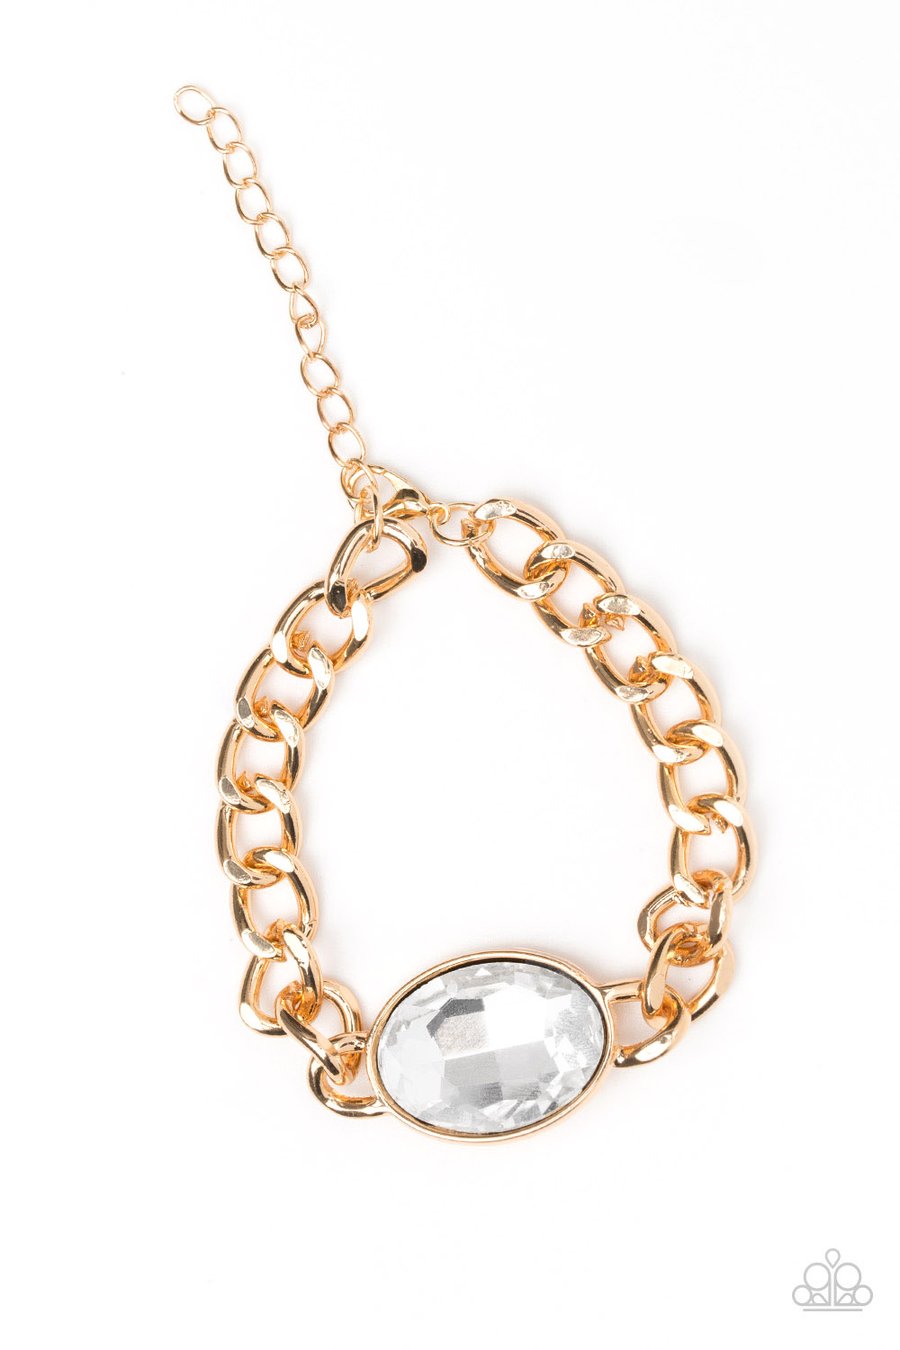 Paparazzi Accessories Luxury Lush - Gold Bracelets - Lady T Accessories